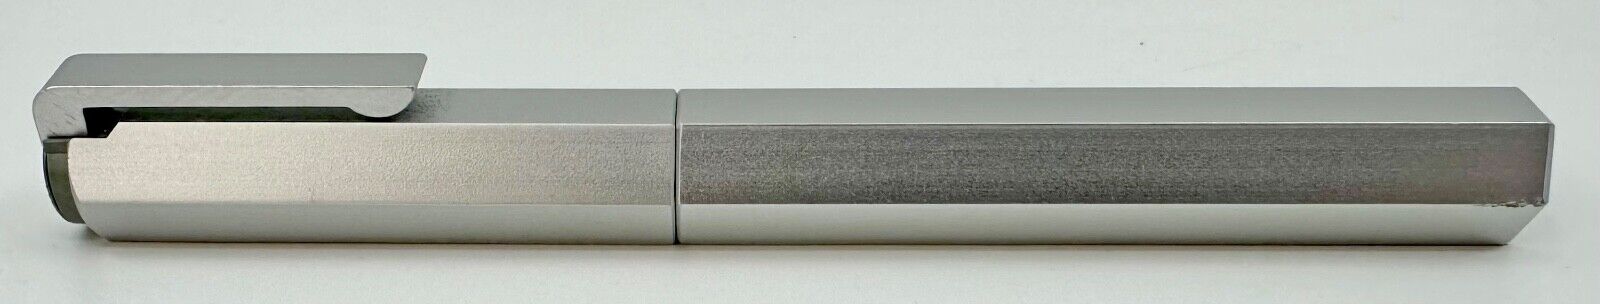 Worther Aluminium Hexagonal Fountain Pen - Rare Vintage - great condition